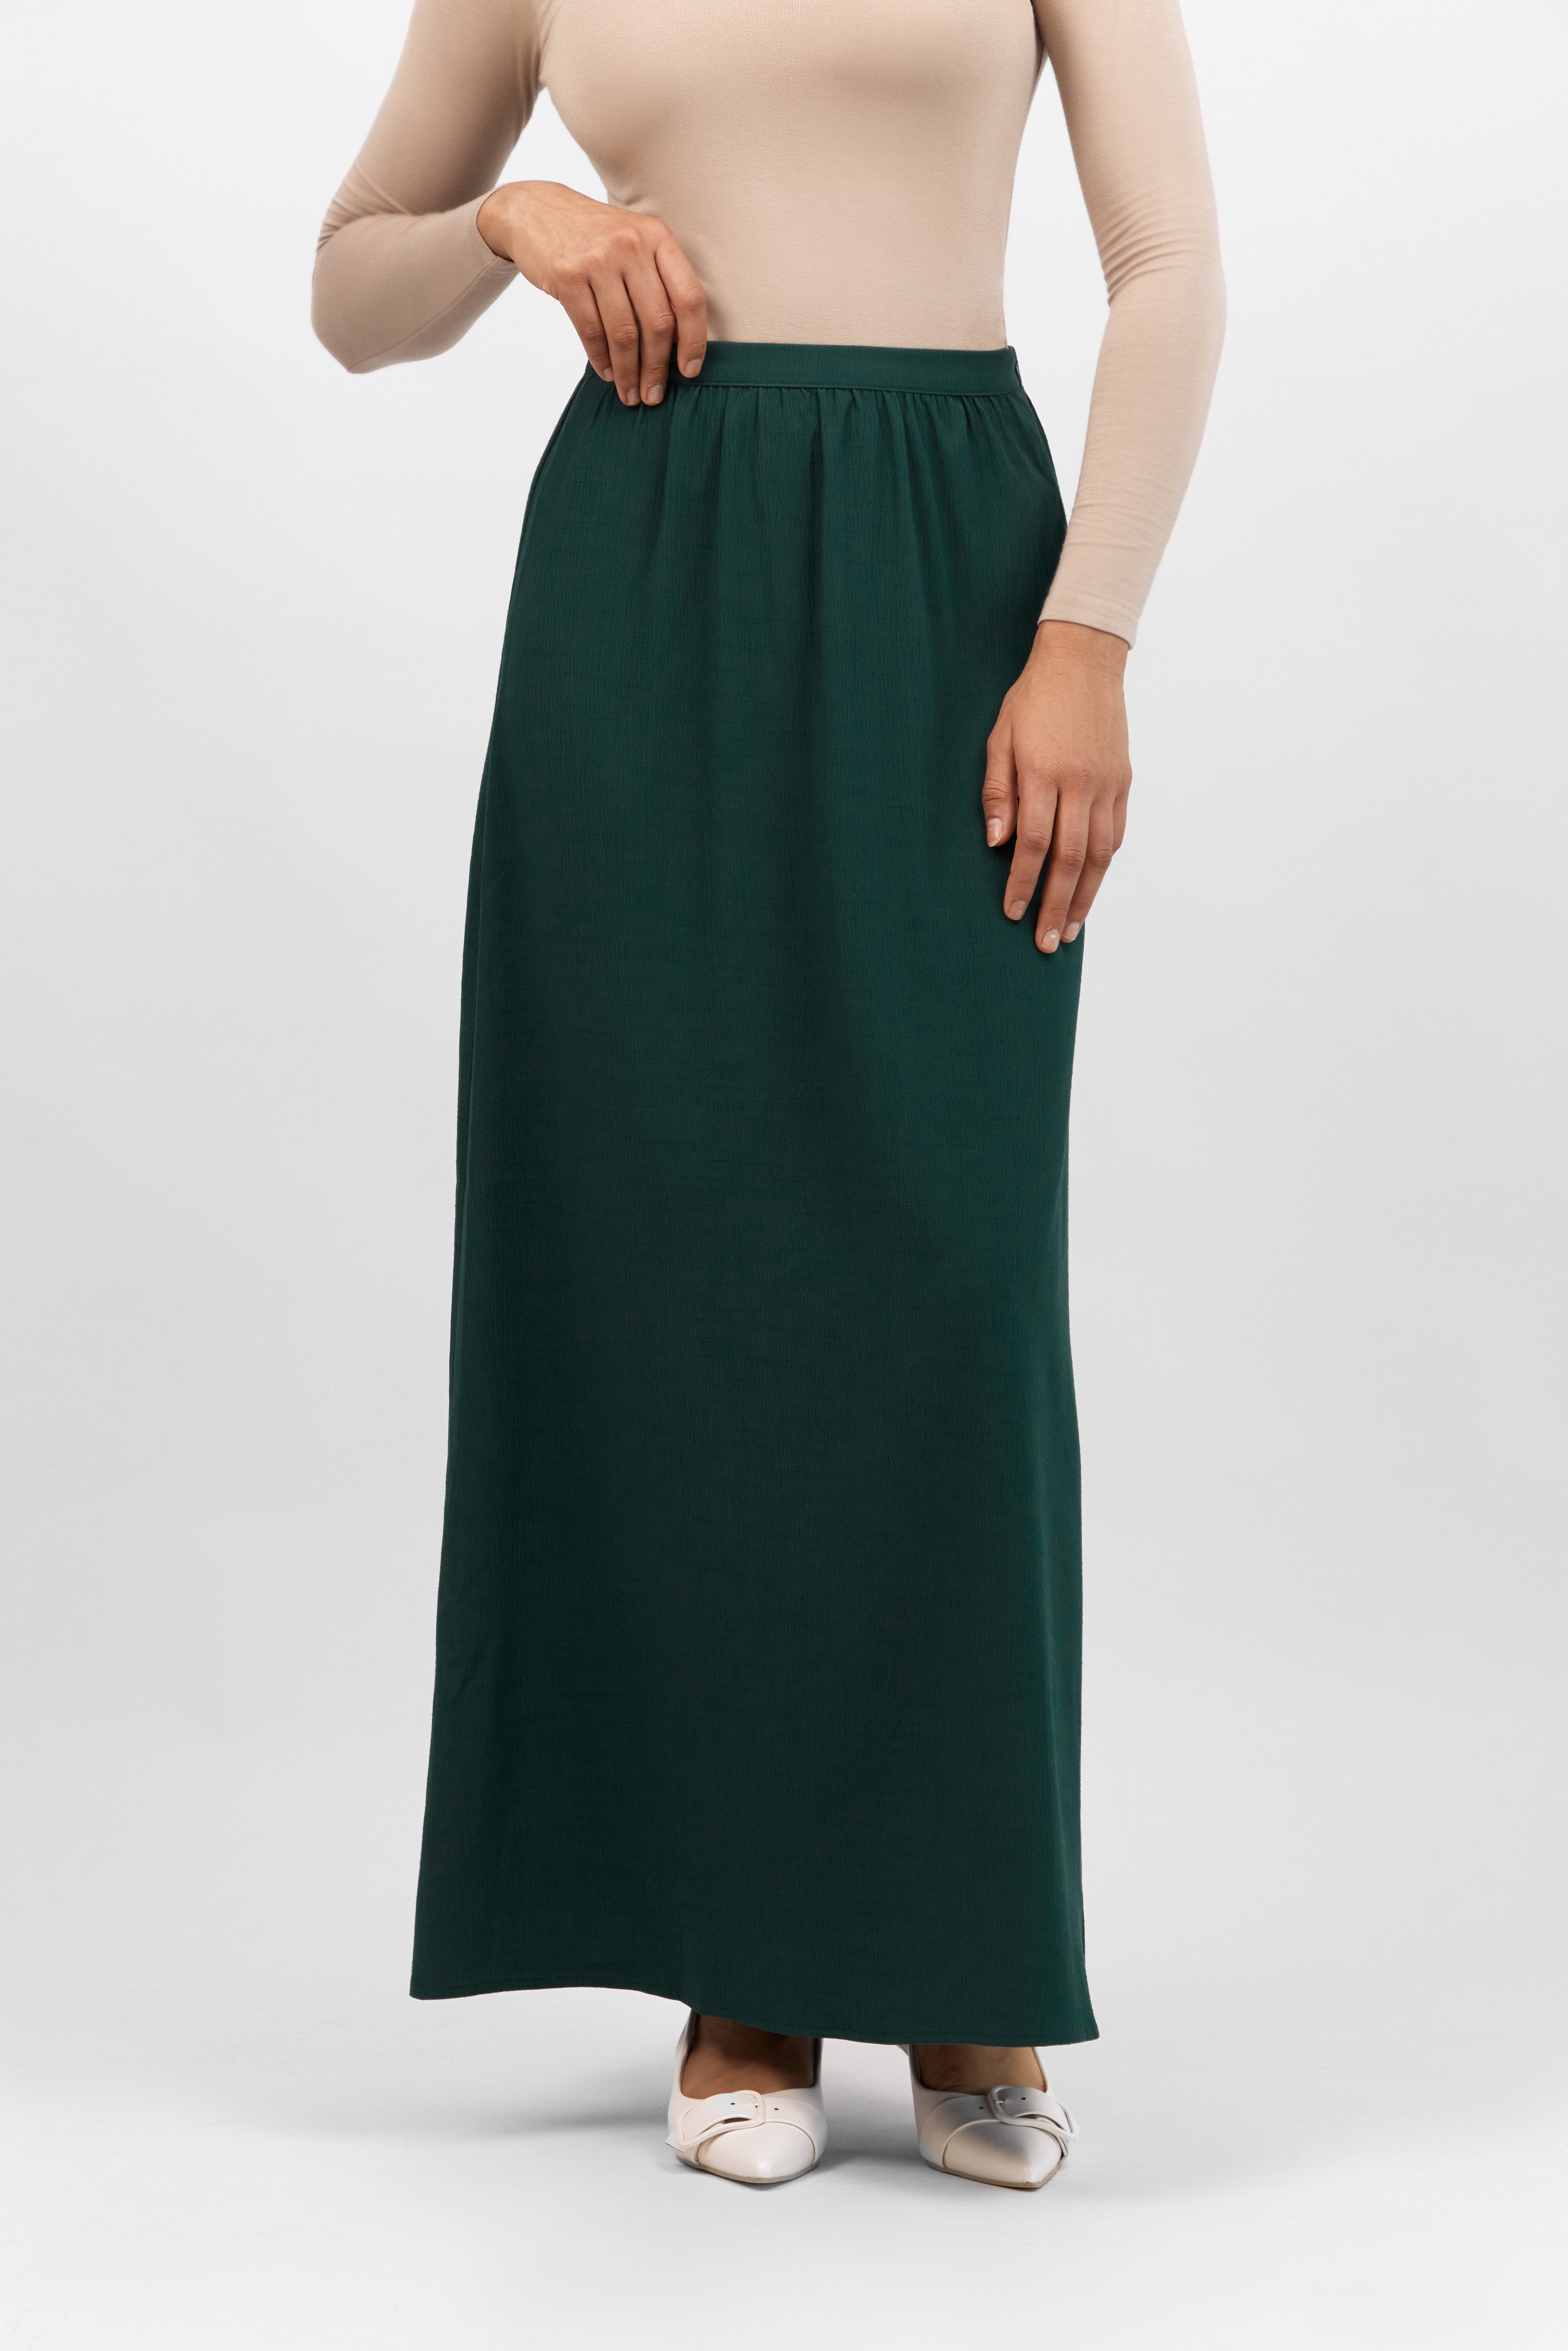 US - Flowy Maxi Skirt - Emerald